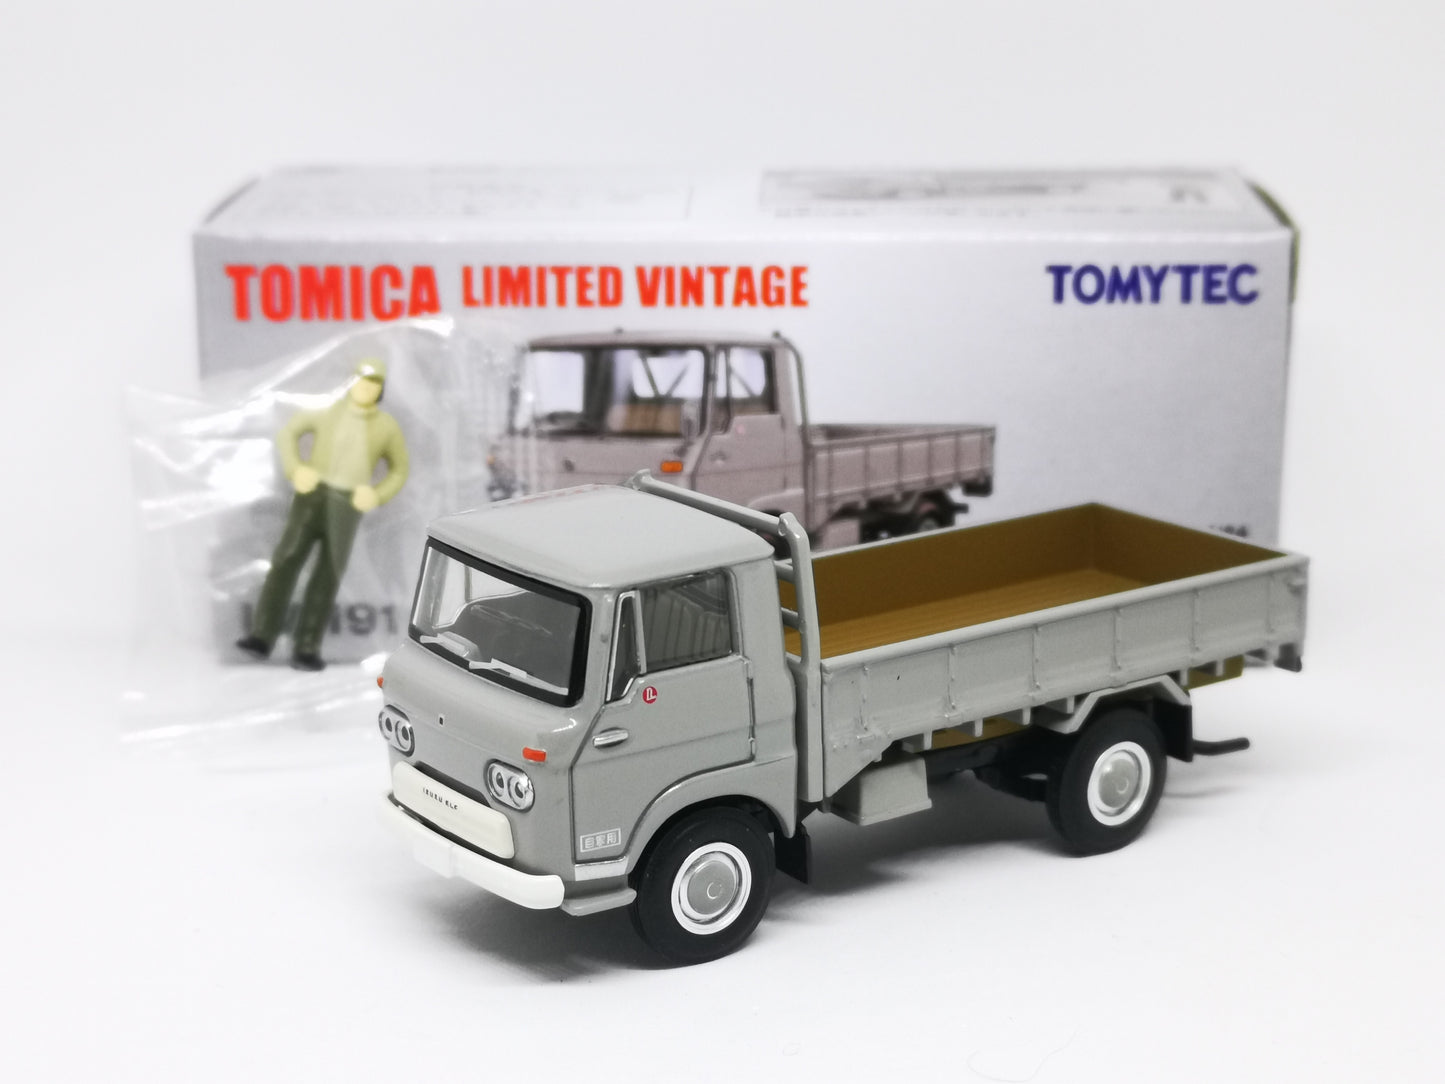 Tomica Limited Vintage LV-191a Isuzu Elf High Floor Carrier 66 Years